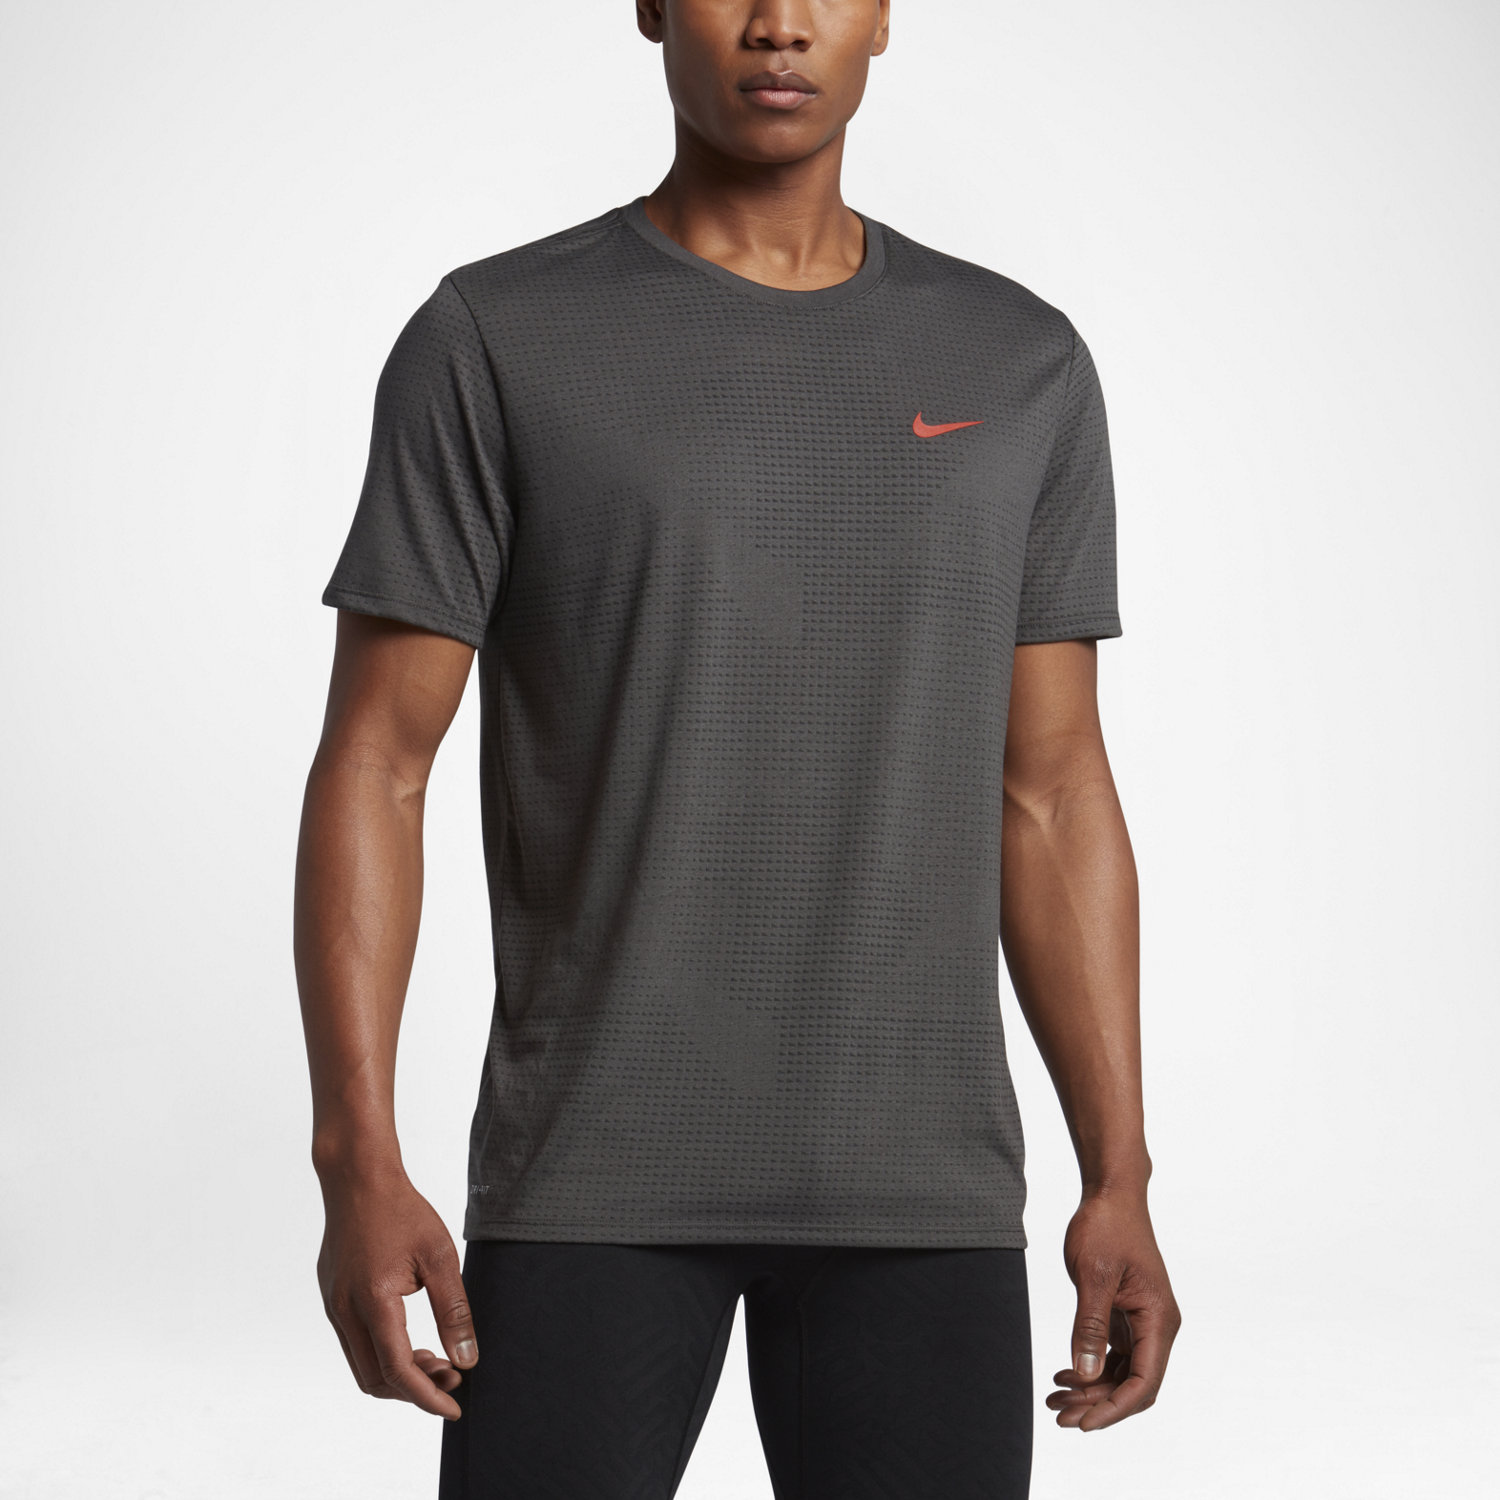 Nike Dry - Men's Running T-Shirt